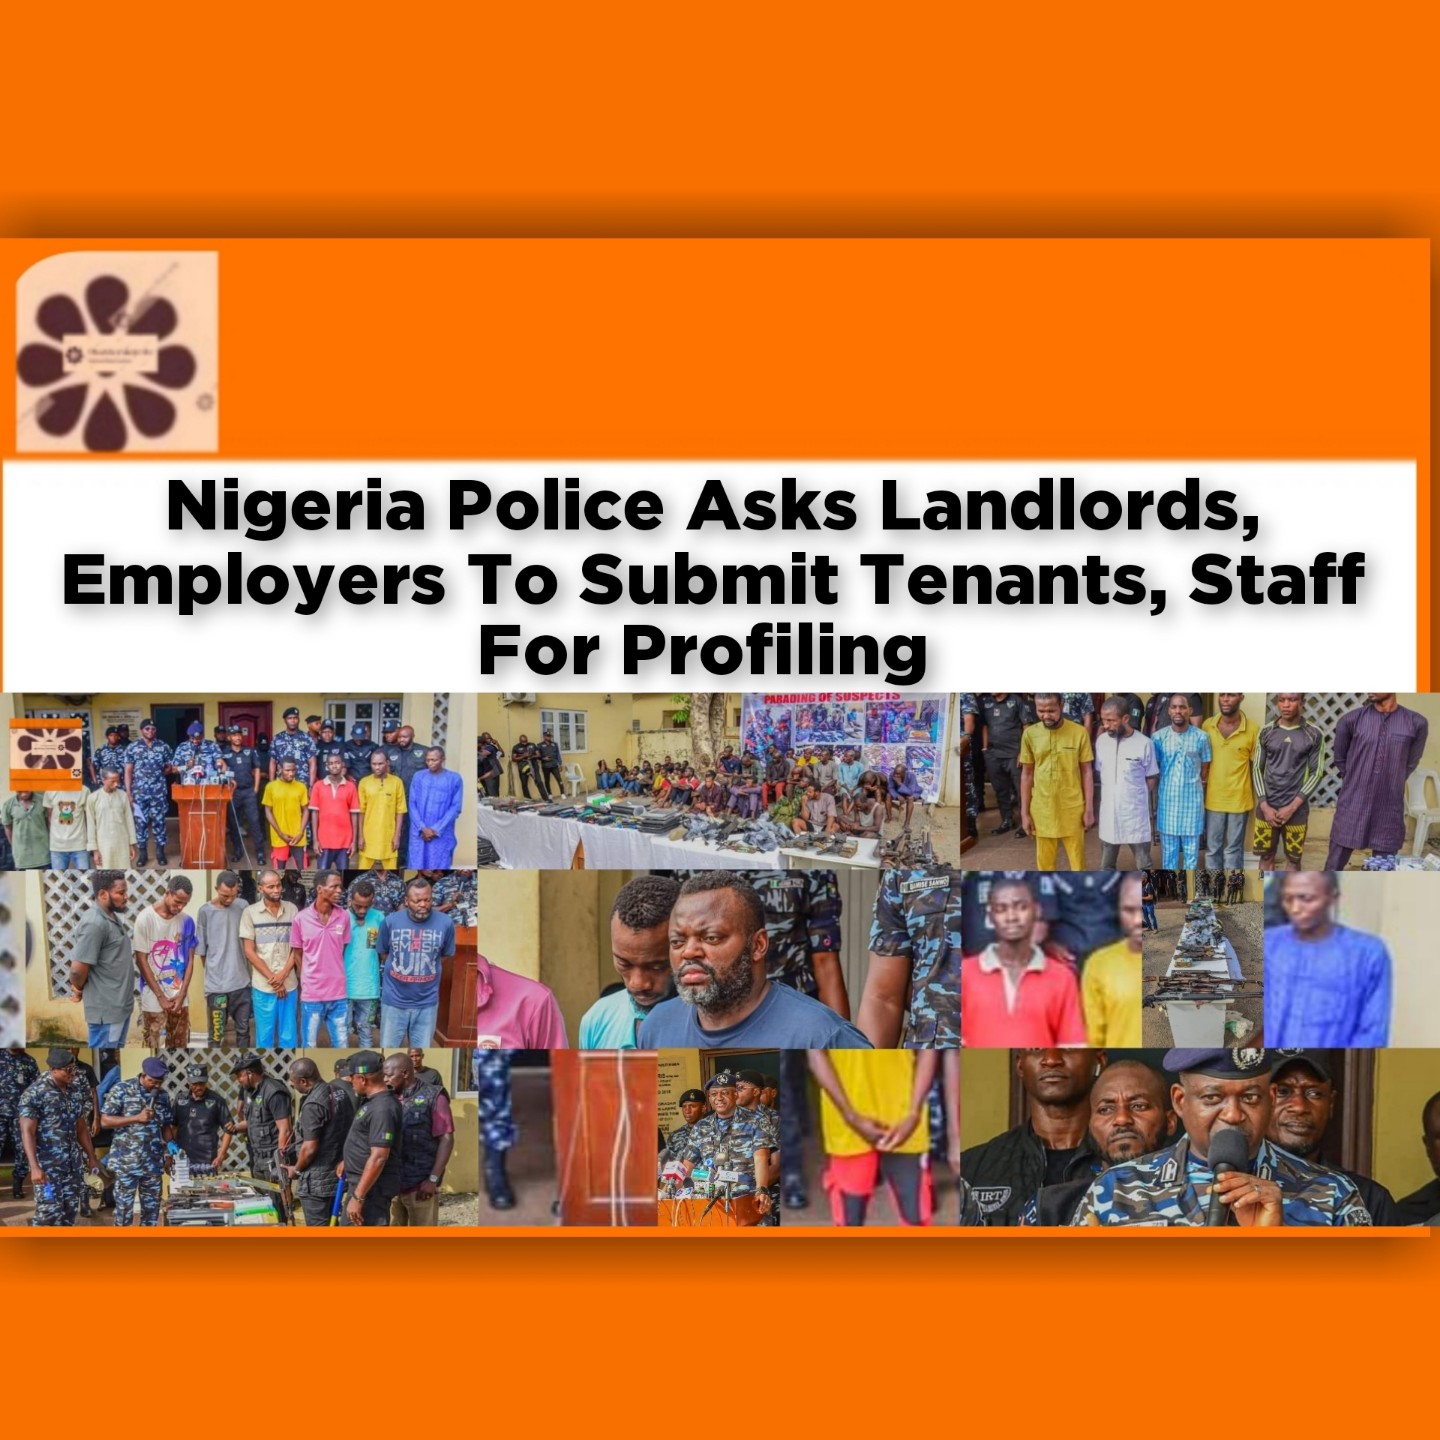 Nigeria Police Asks Landlords, Employers To Submit Tenants, Staff For Profiling ~ OsazuwaAkonedo #Treason